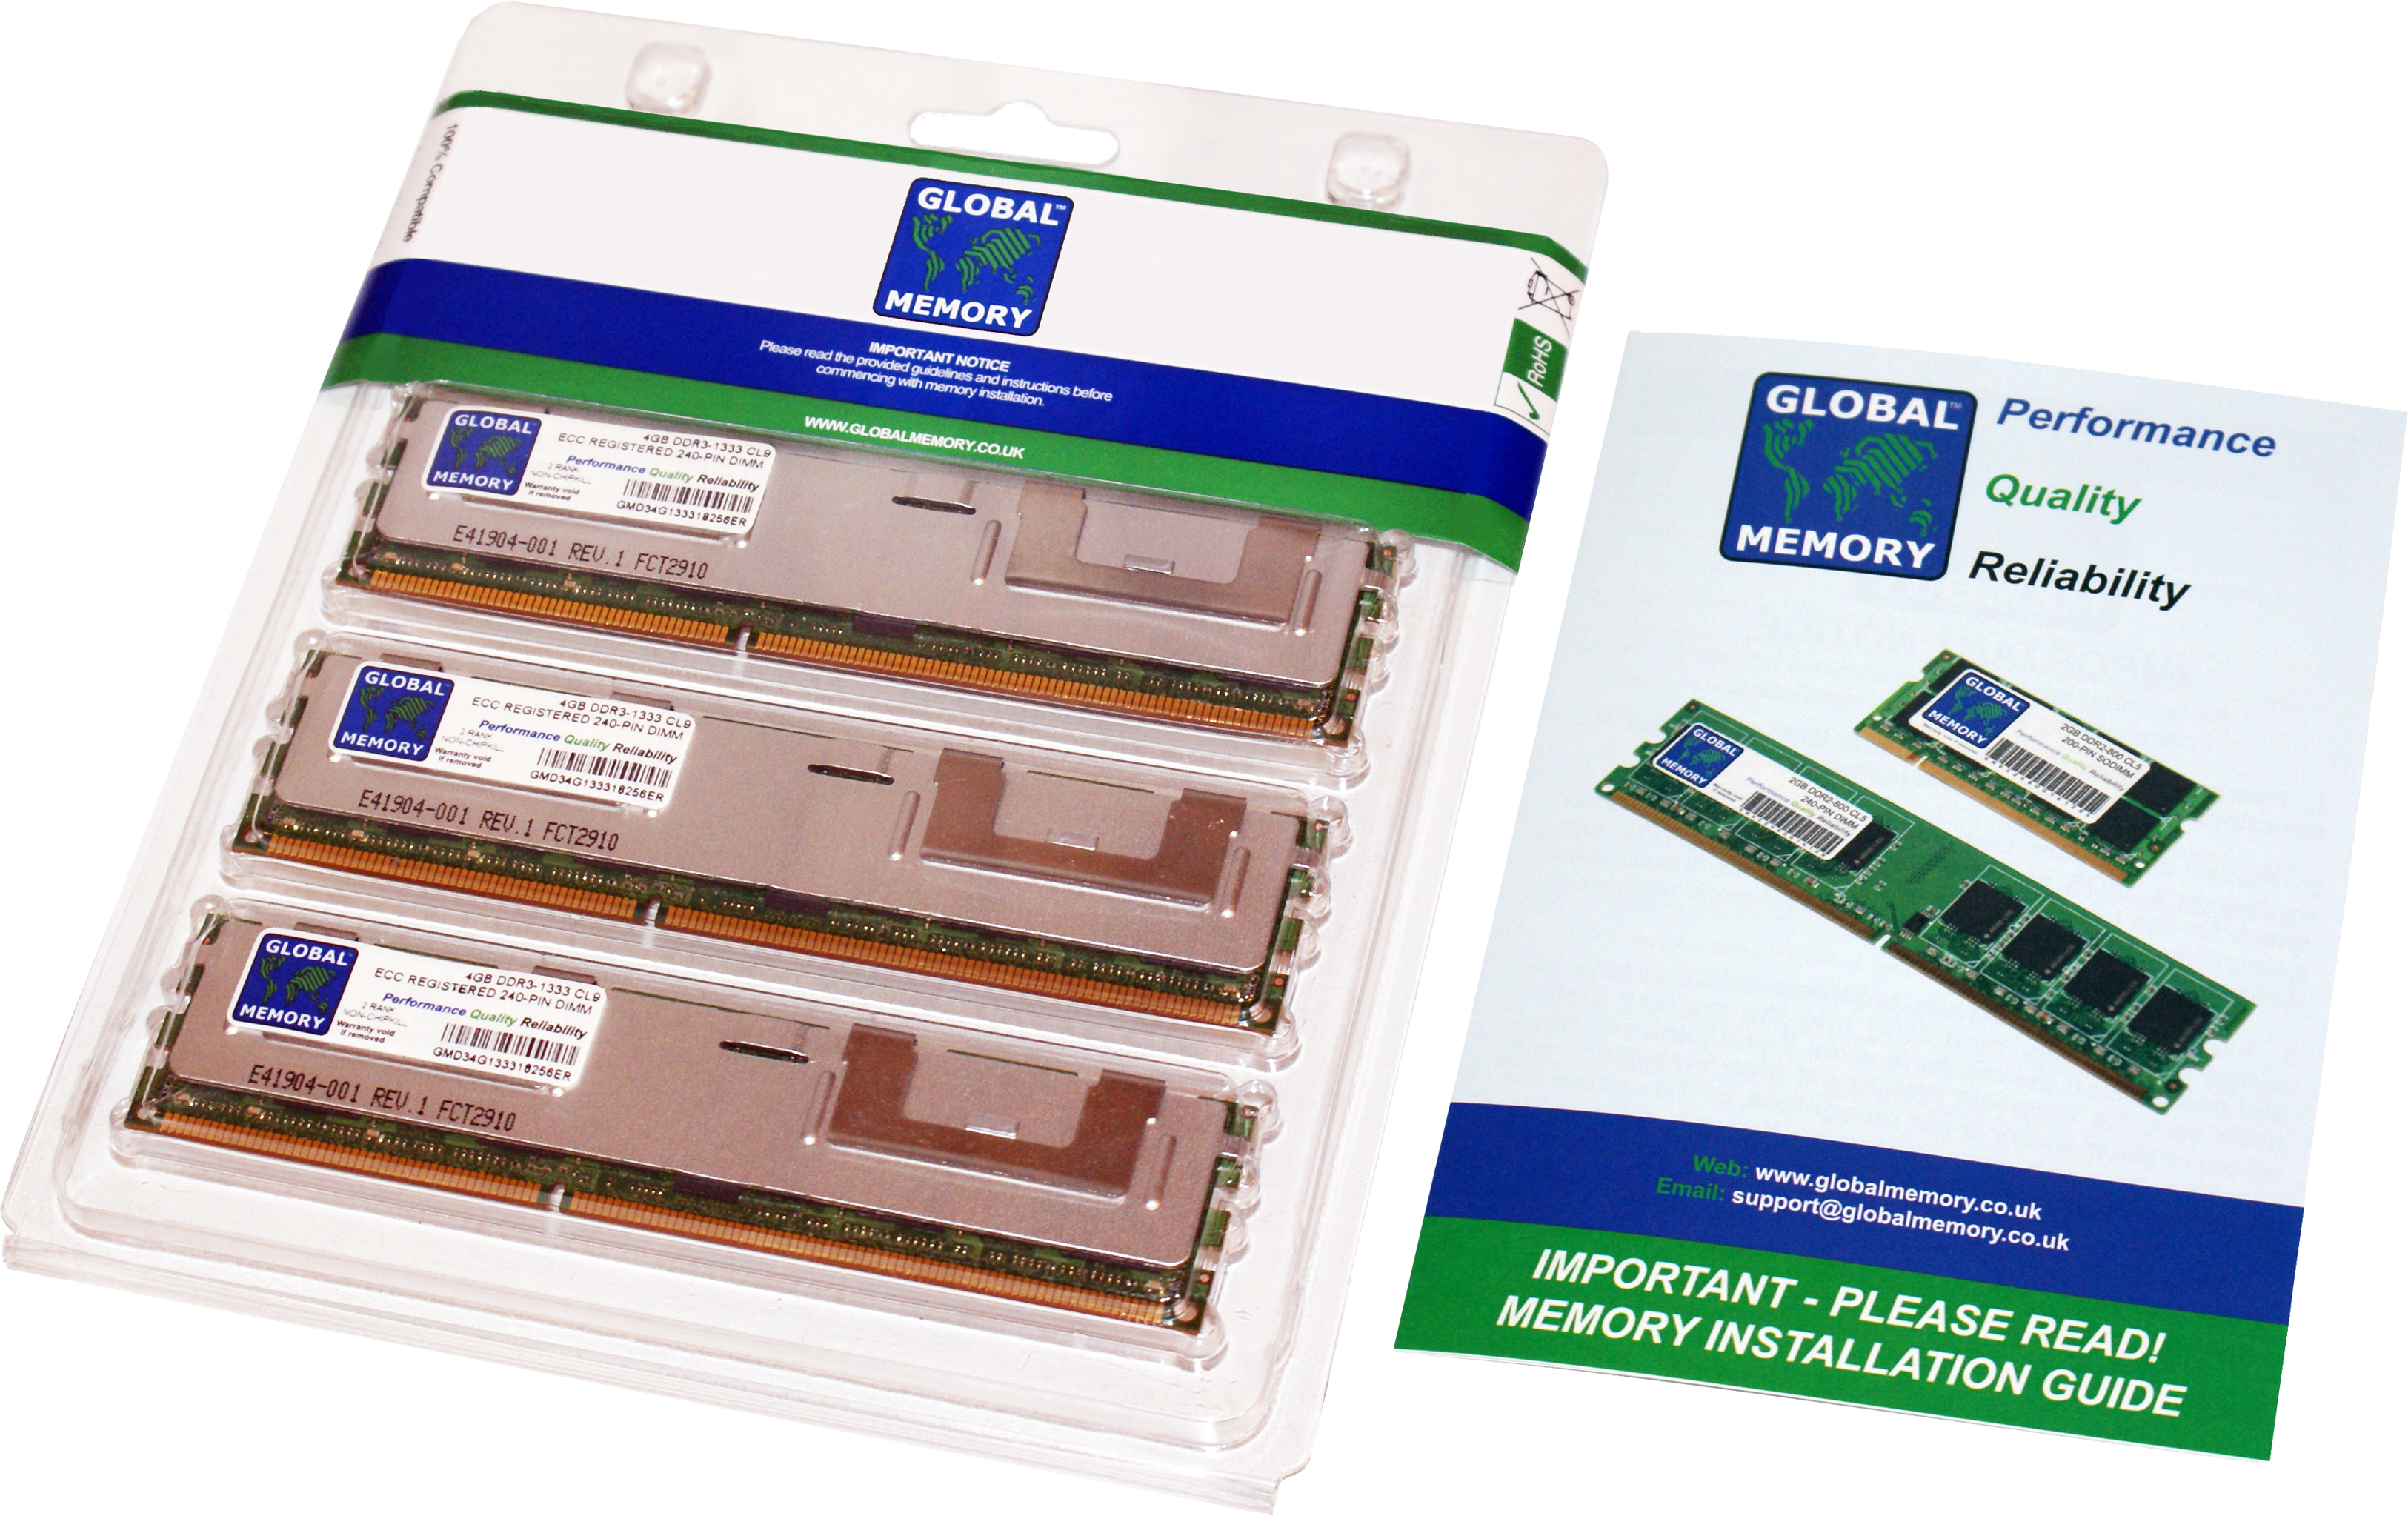 48GB (3 x 16GB) DDR3 1066/1333MHz 240-PIN ECC REGISTERED DIMM (RDIMM) MEMORY RAM KIT FOR IBM/LENOVO SERVERS/WORKSTATIONS (12 RANK KIT NON-CHIPKILL)